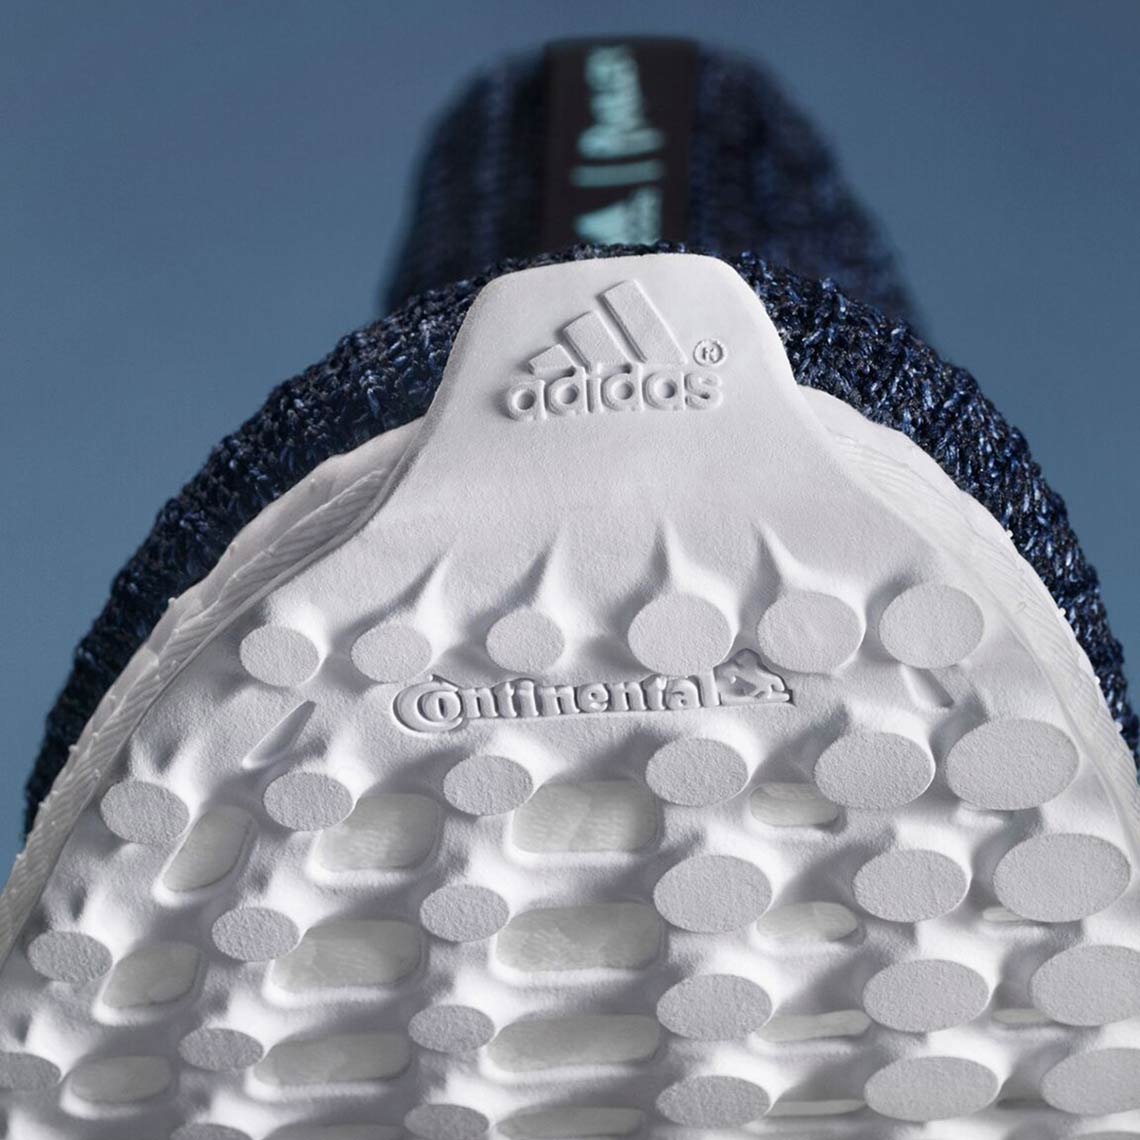 adidas ultra boost 4.0 parley legend ink carbon blue spirit